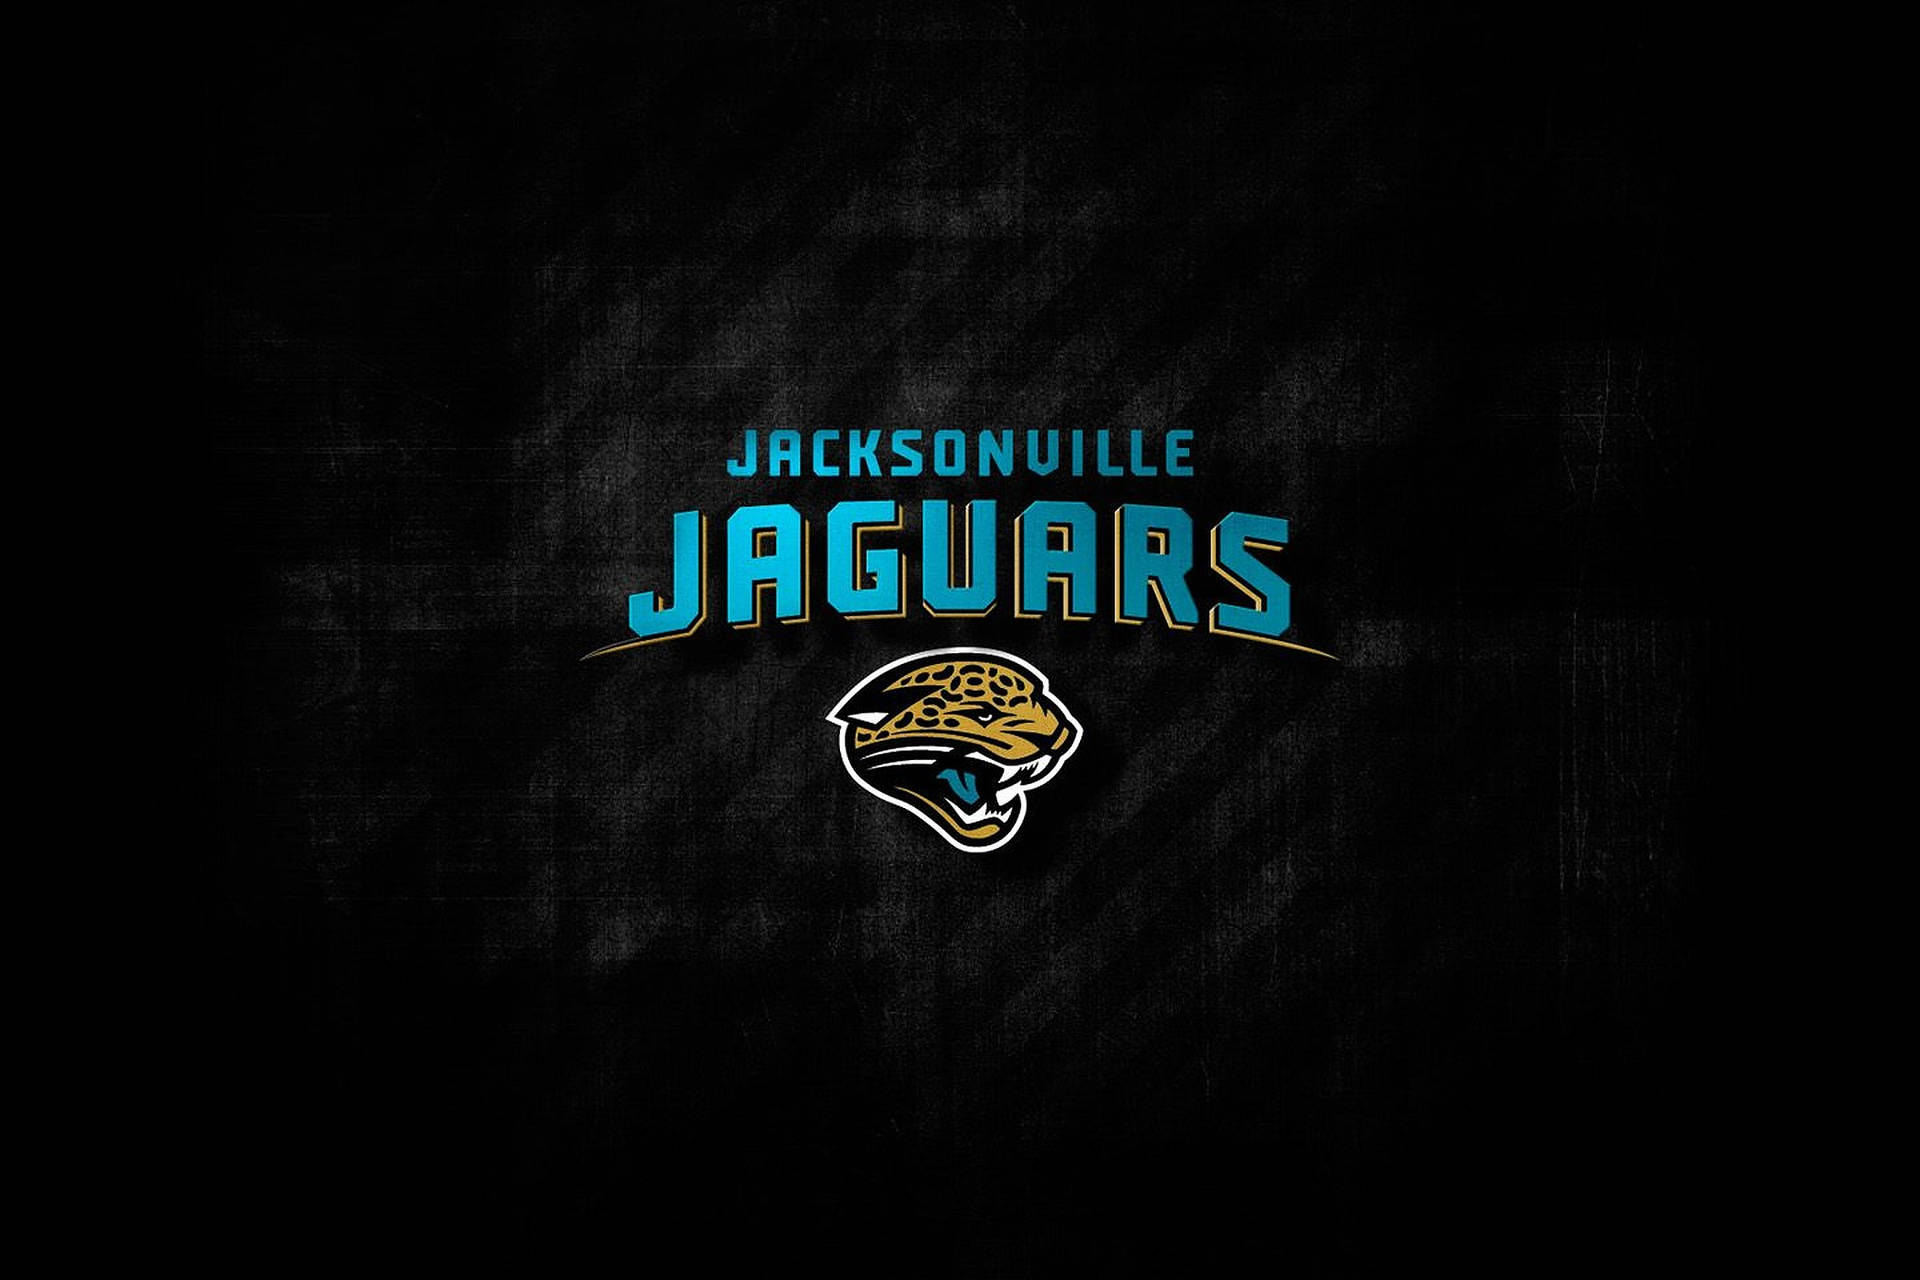 Jacksonville Jaguars In The Dark Background